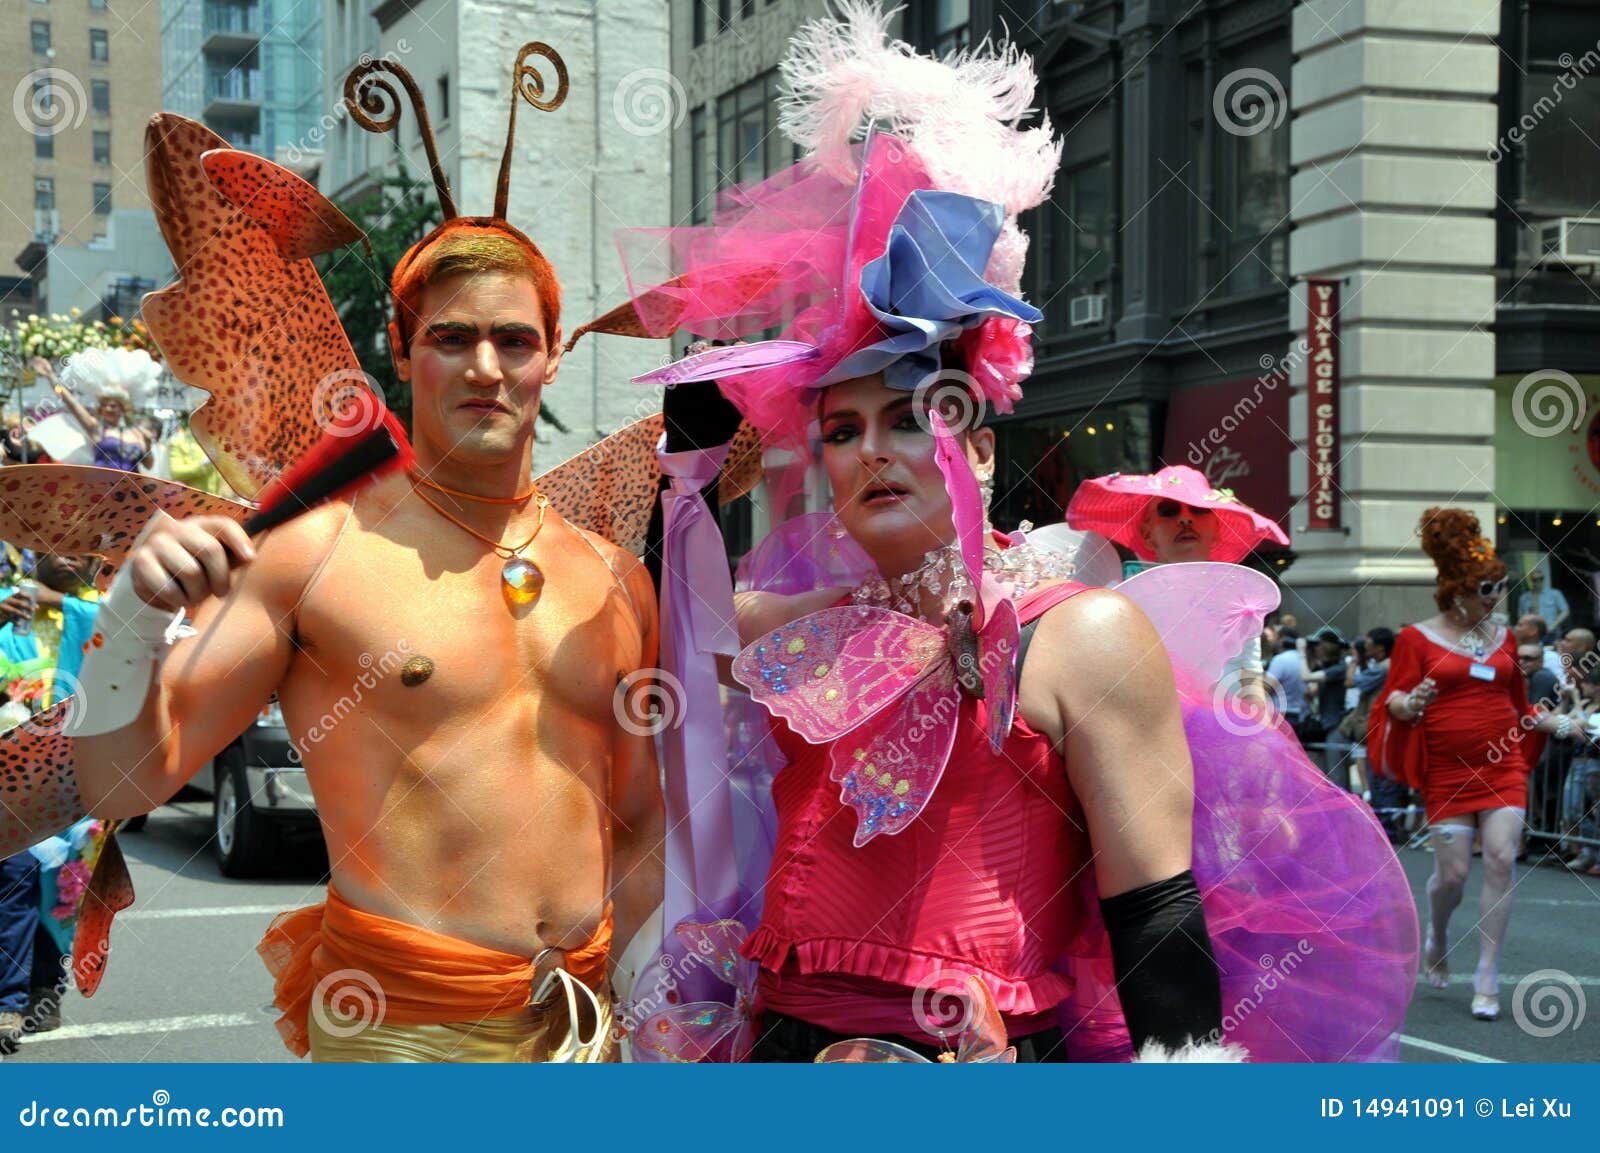 296 Flamboyant Gay Photos Free Royalty Free Stock Photos From Dreamstime